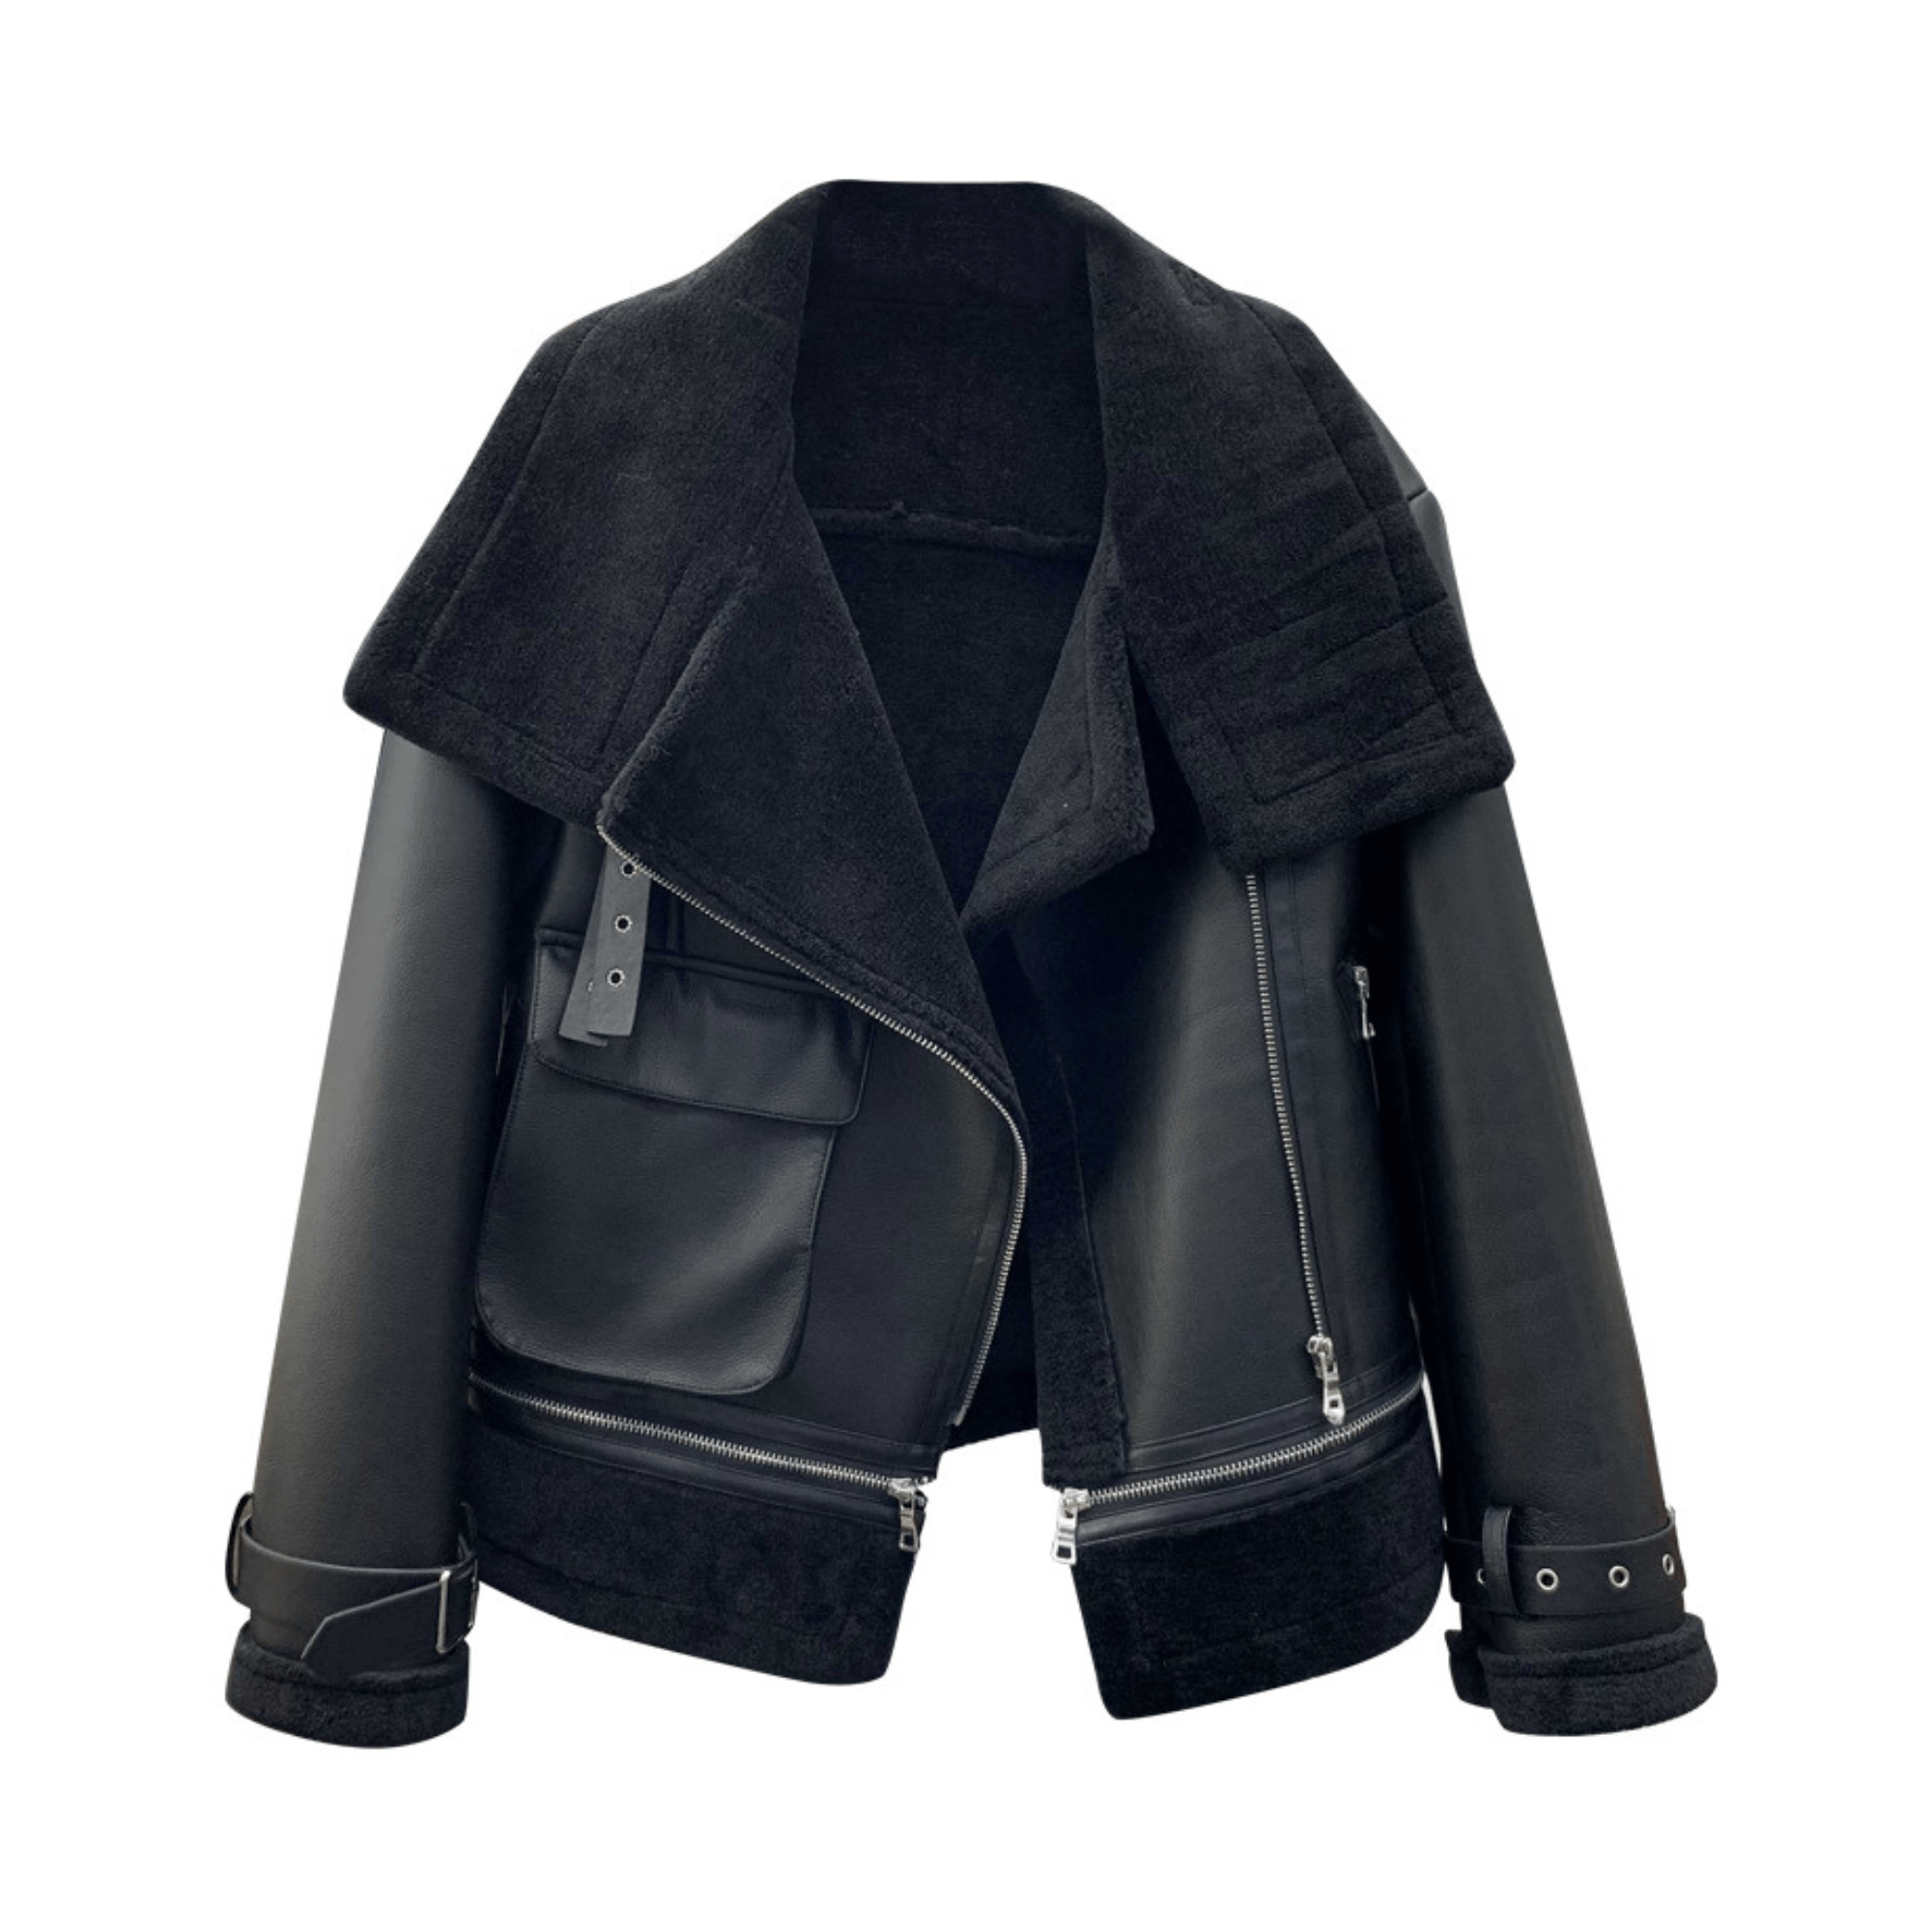 Thin Fur Strapped Cuffs Short Coat - Kelly Obi New York